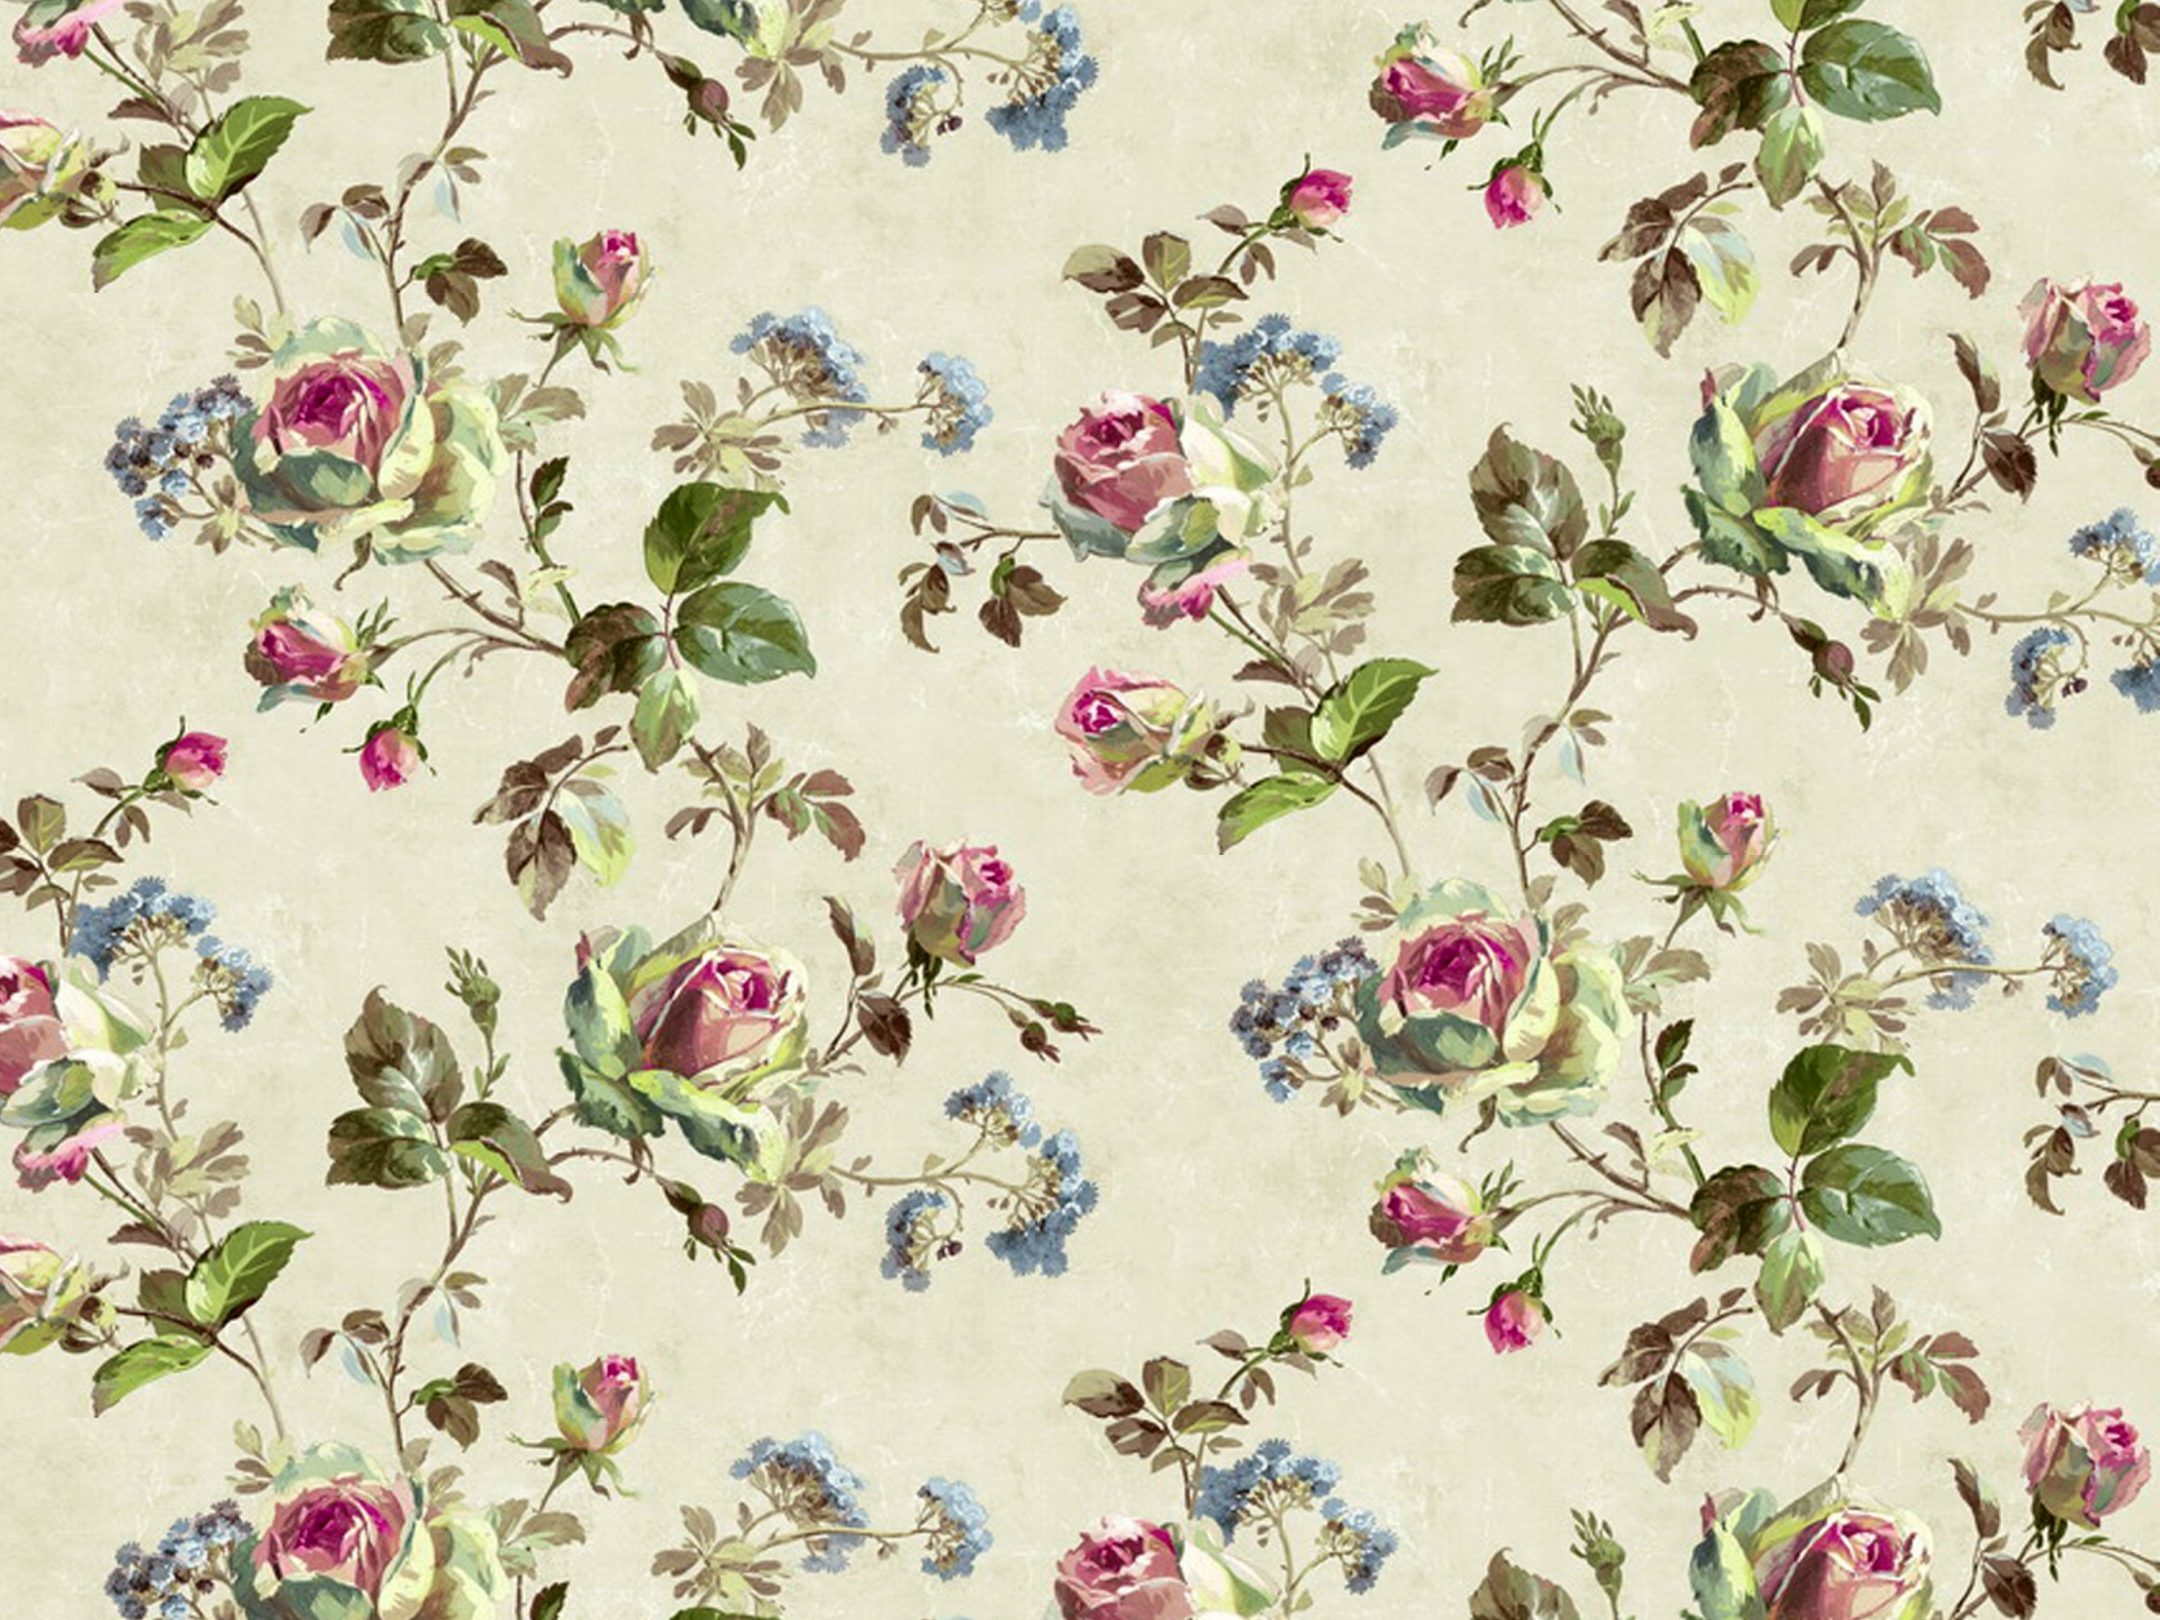 2160x1620 iPad wallpaper 4k Aesthetic Paper Colorful Flowers Paint iPad Wallpaper 2160x1620 pixels resolution